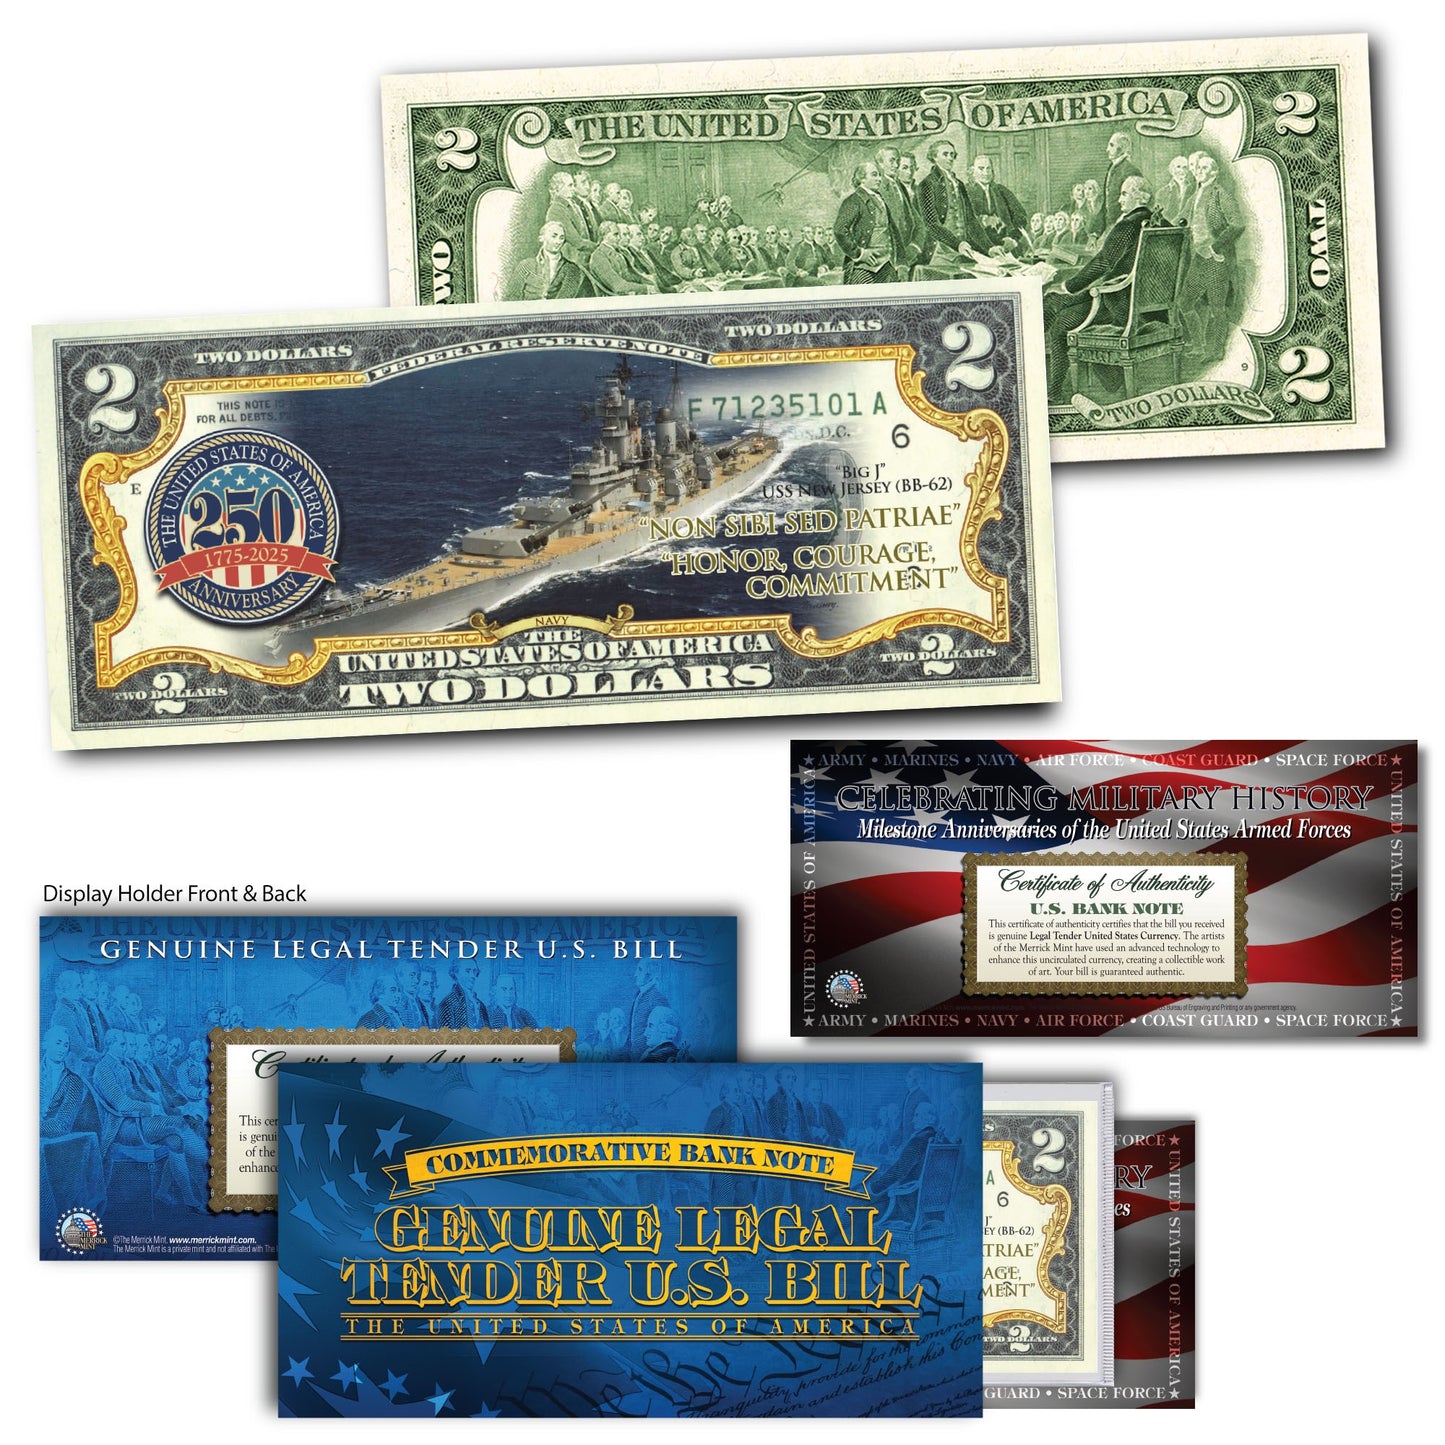 'U.S Navy 250th Anniversary' - Genuine Legal Tender U.S. $2 Bill